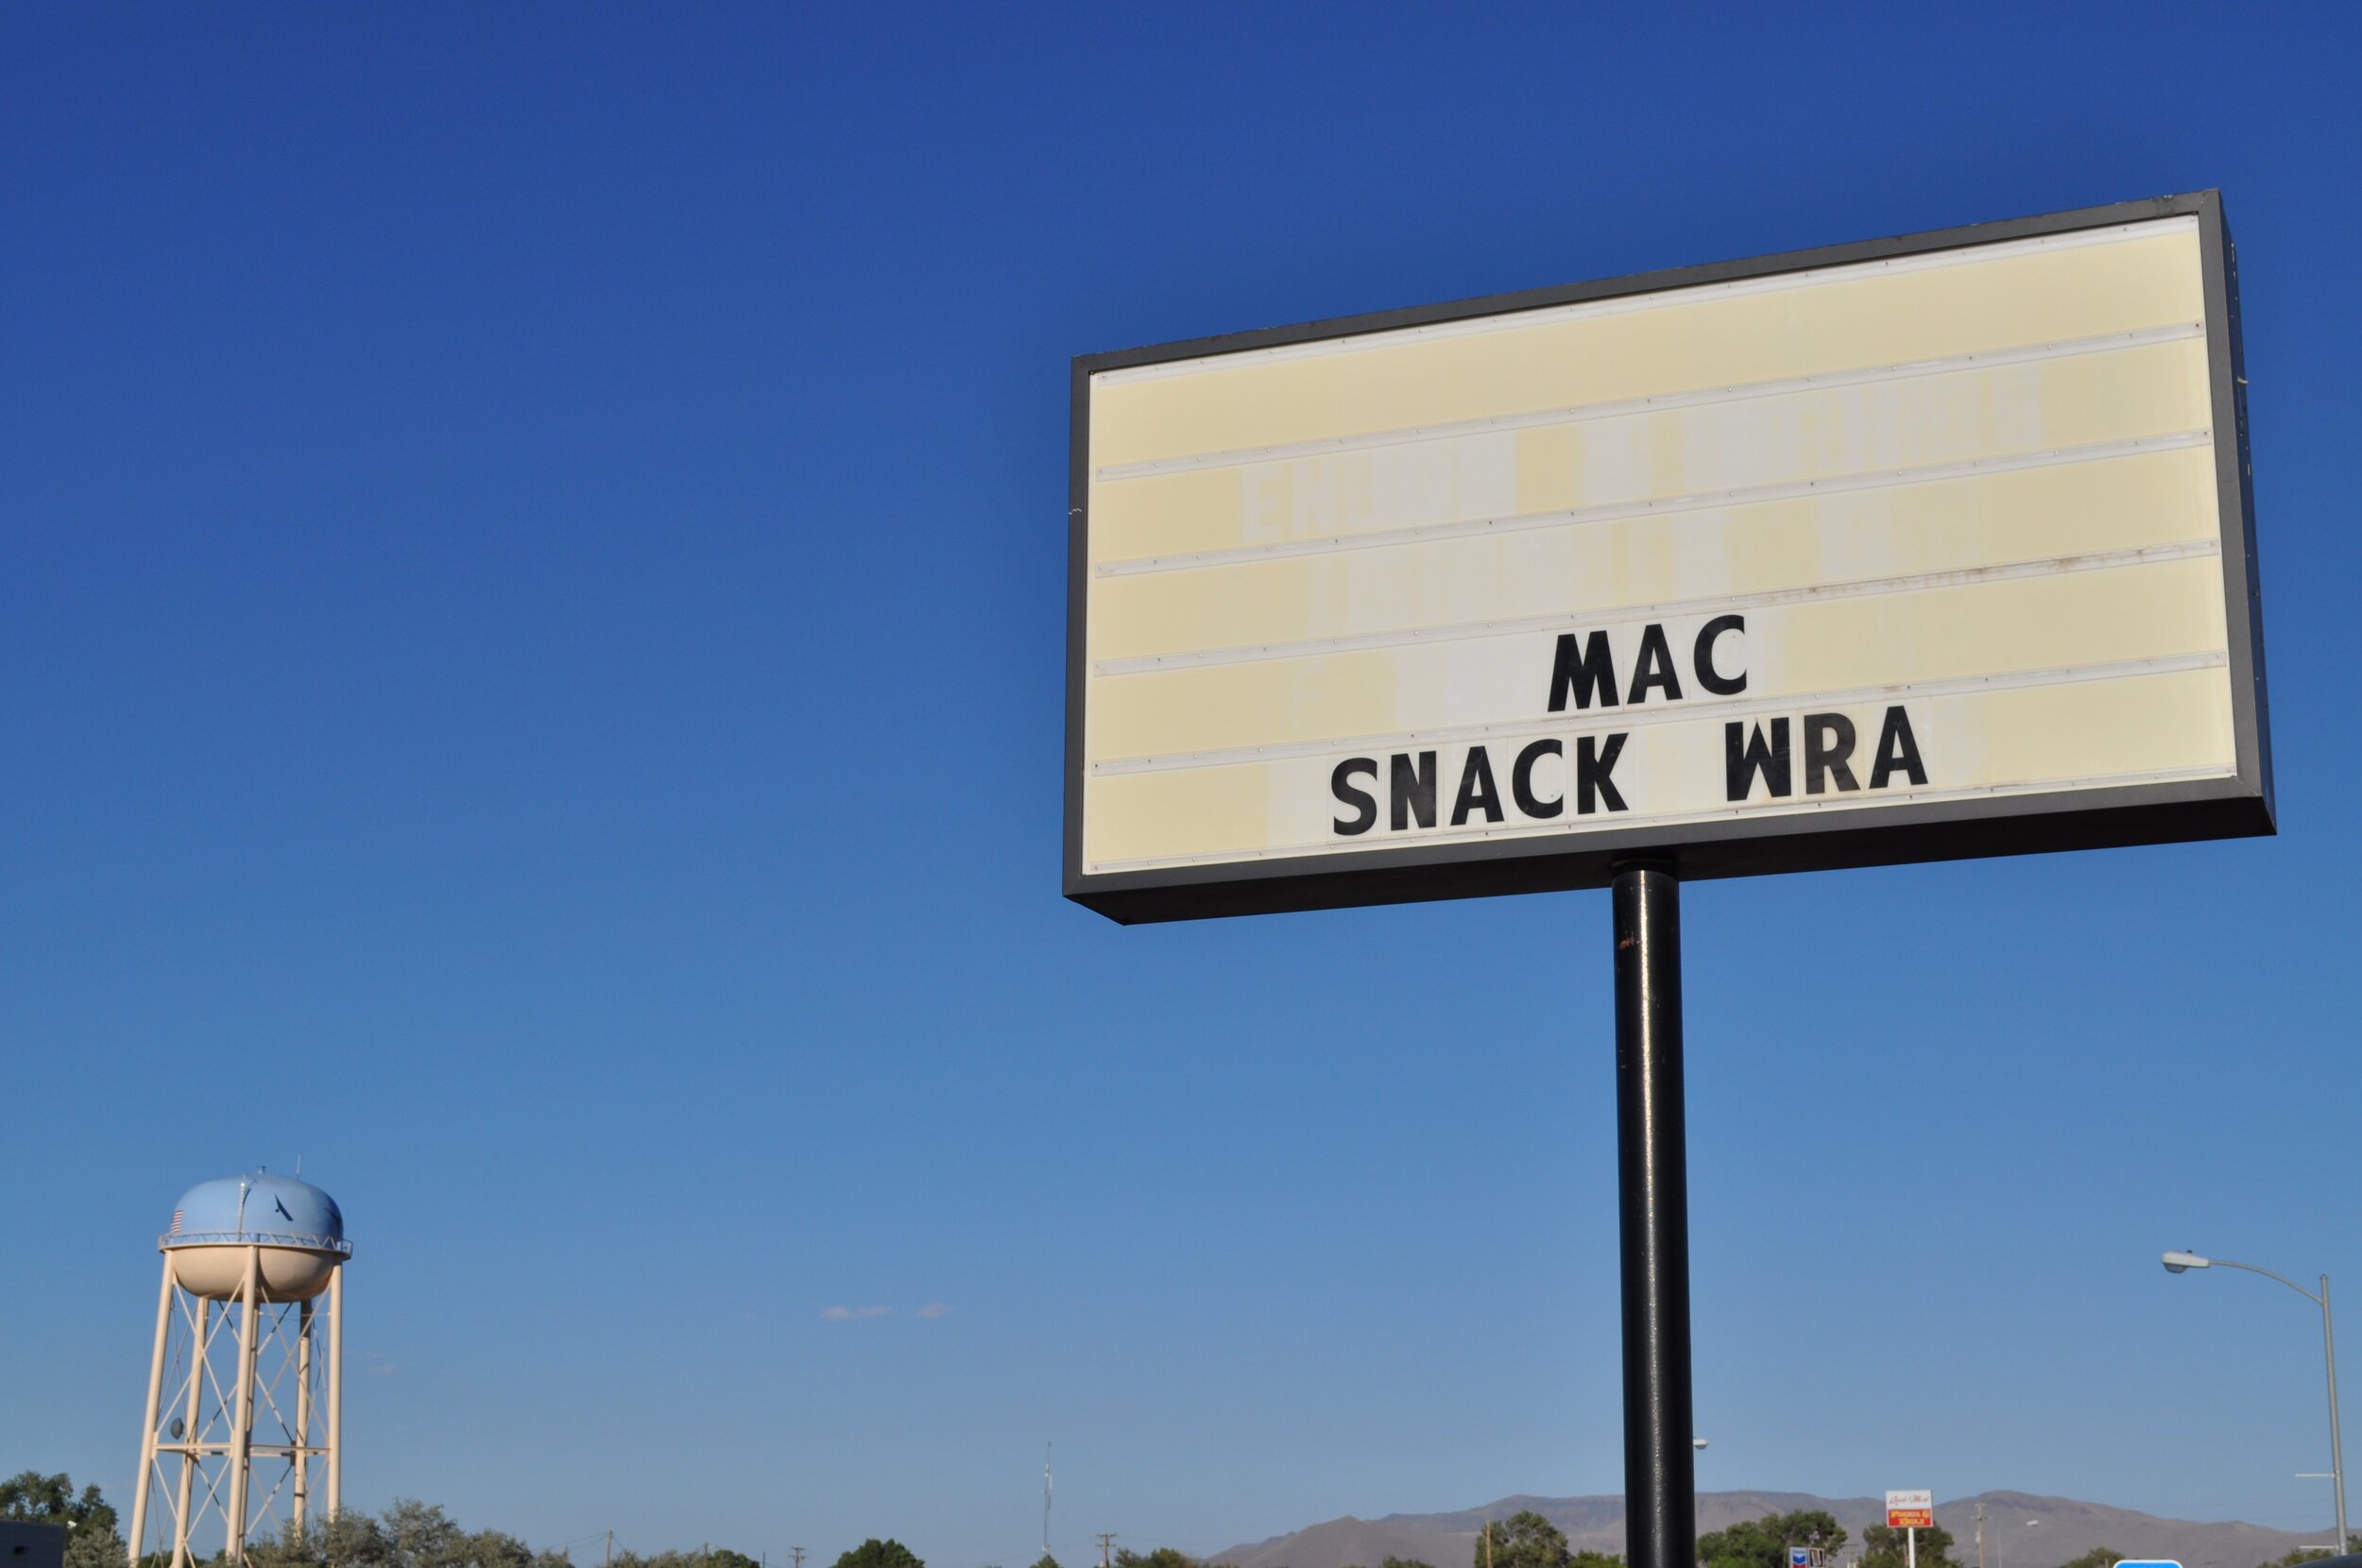 Mac Snack Wra - Battle Mountain, Nevada (2010)